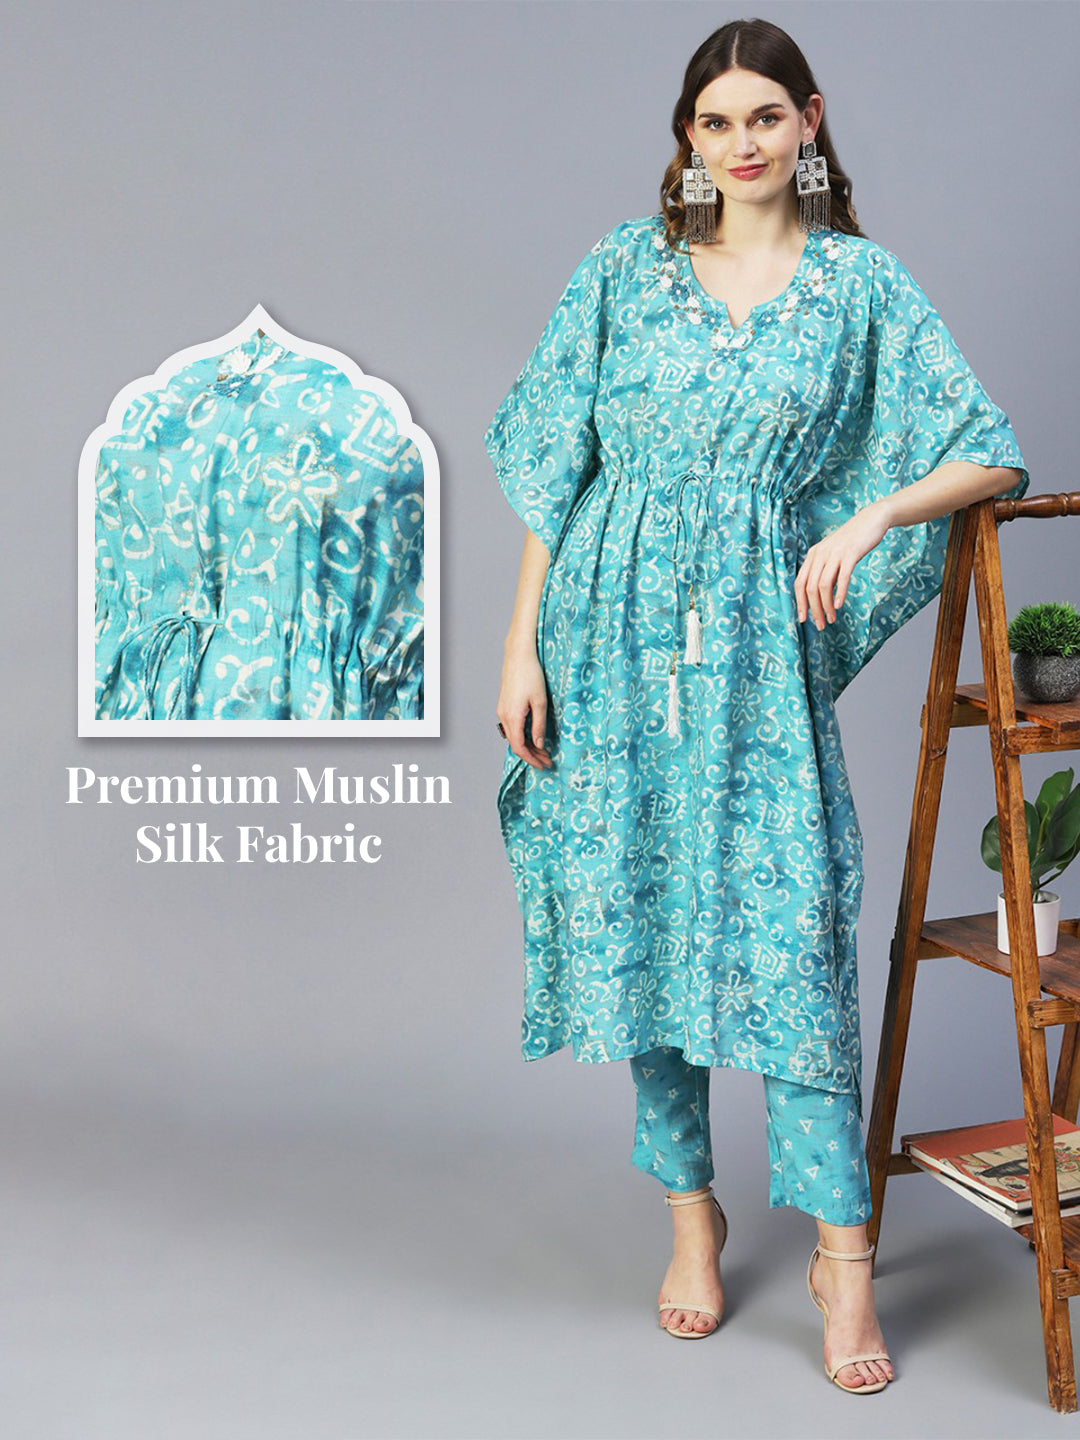 Batik Printed Beads Embellished Kaftan With Printed Pants - Turquoise Blue